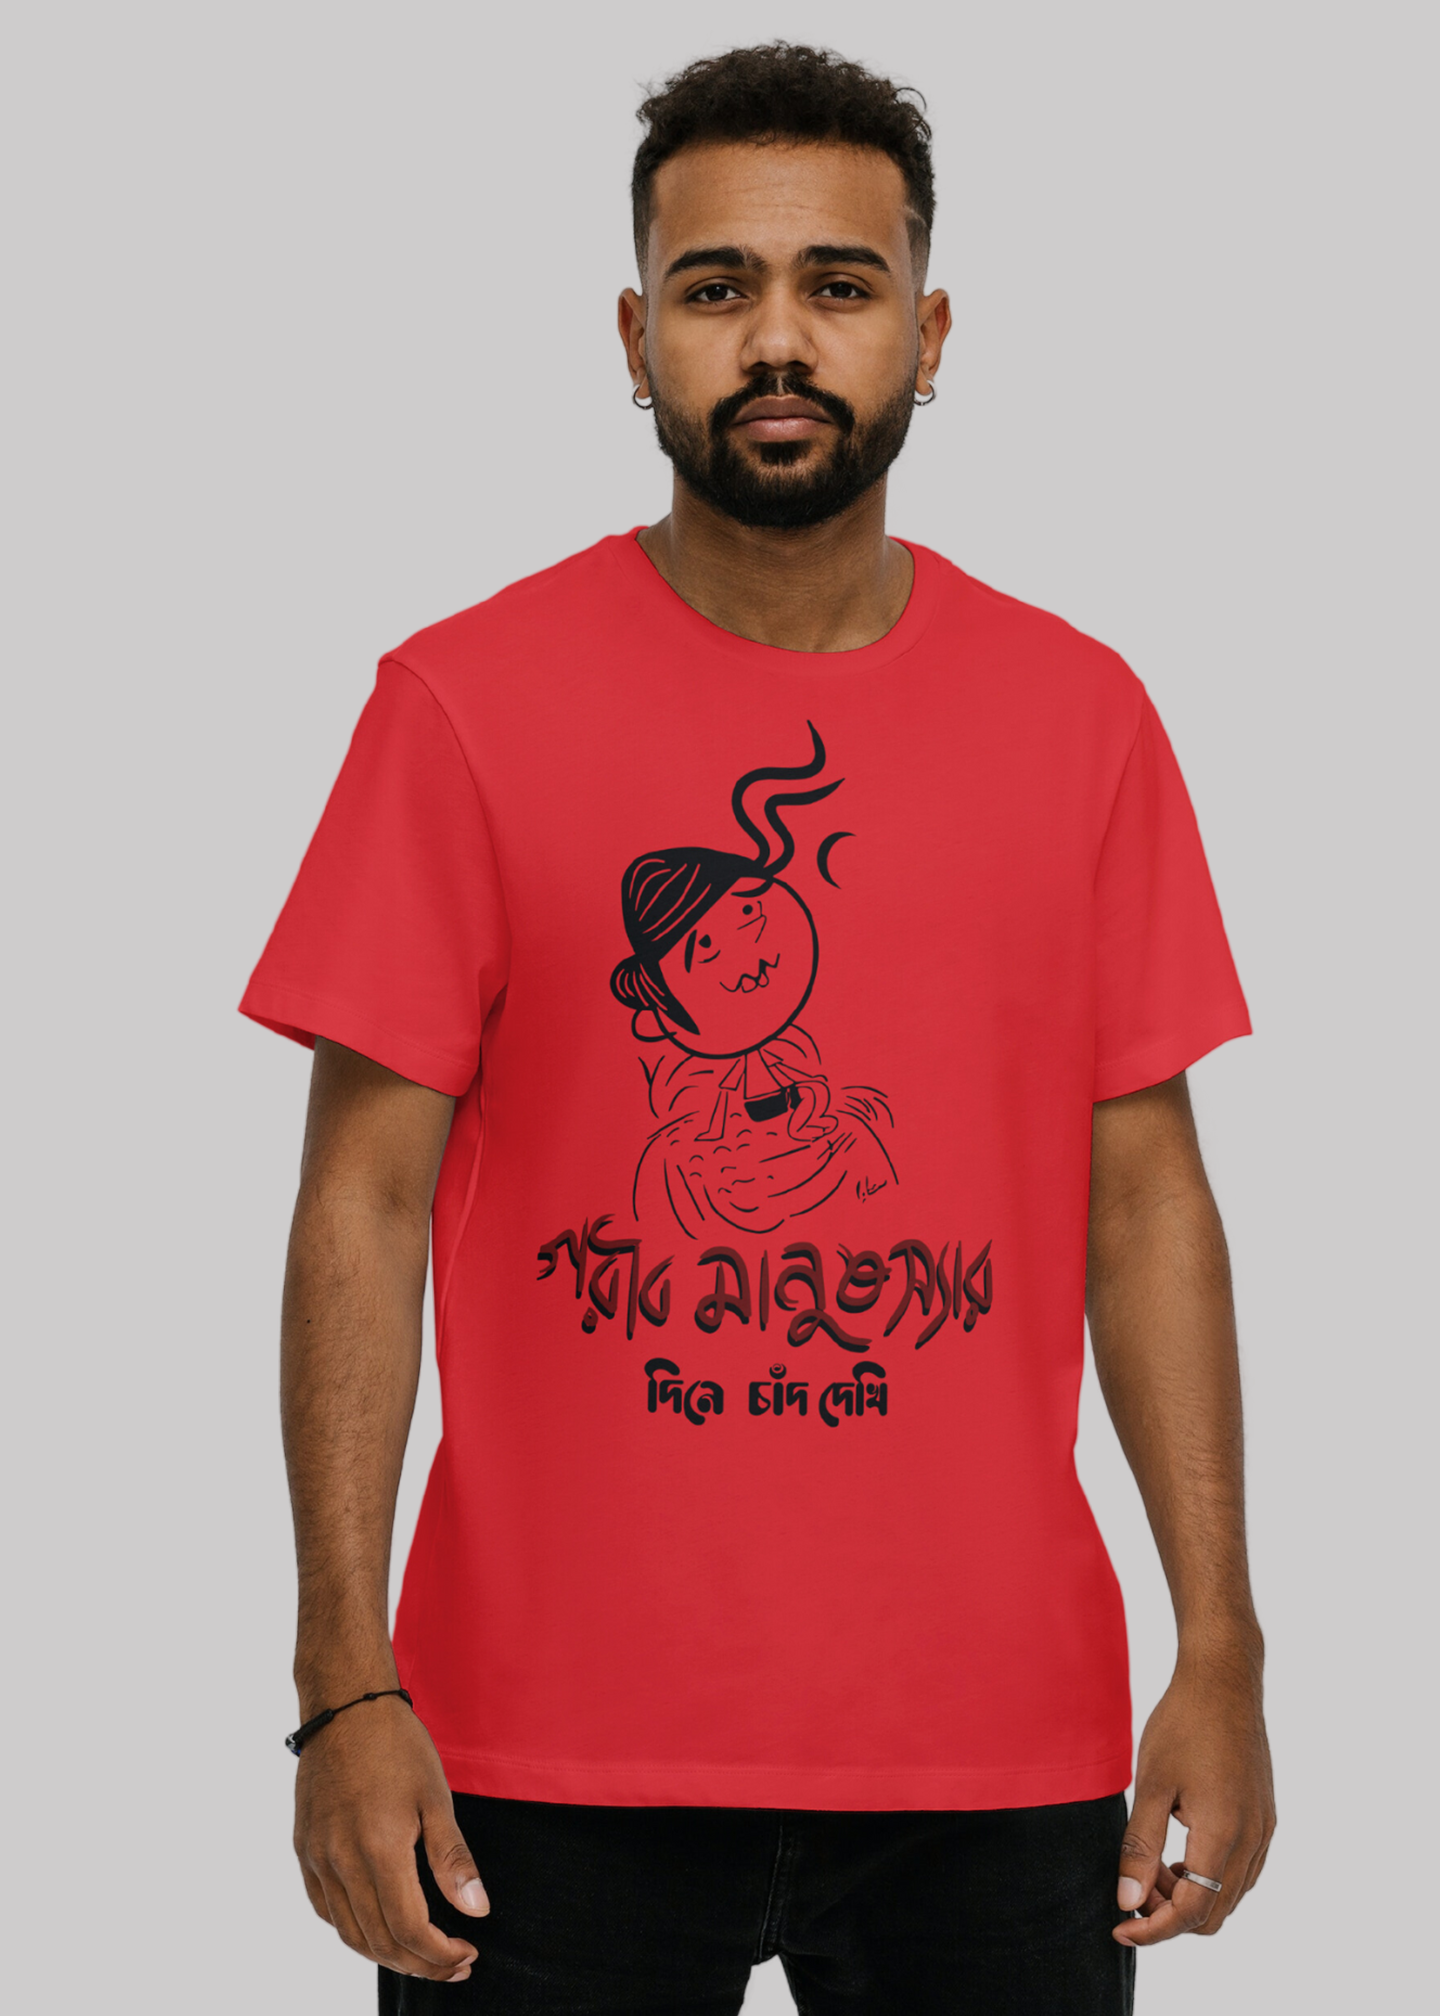 Gorib manush sir Printed Half Sleeve Premium Cotton T-shirt For Men